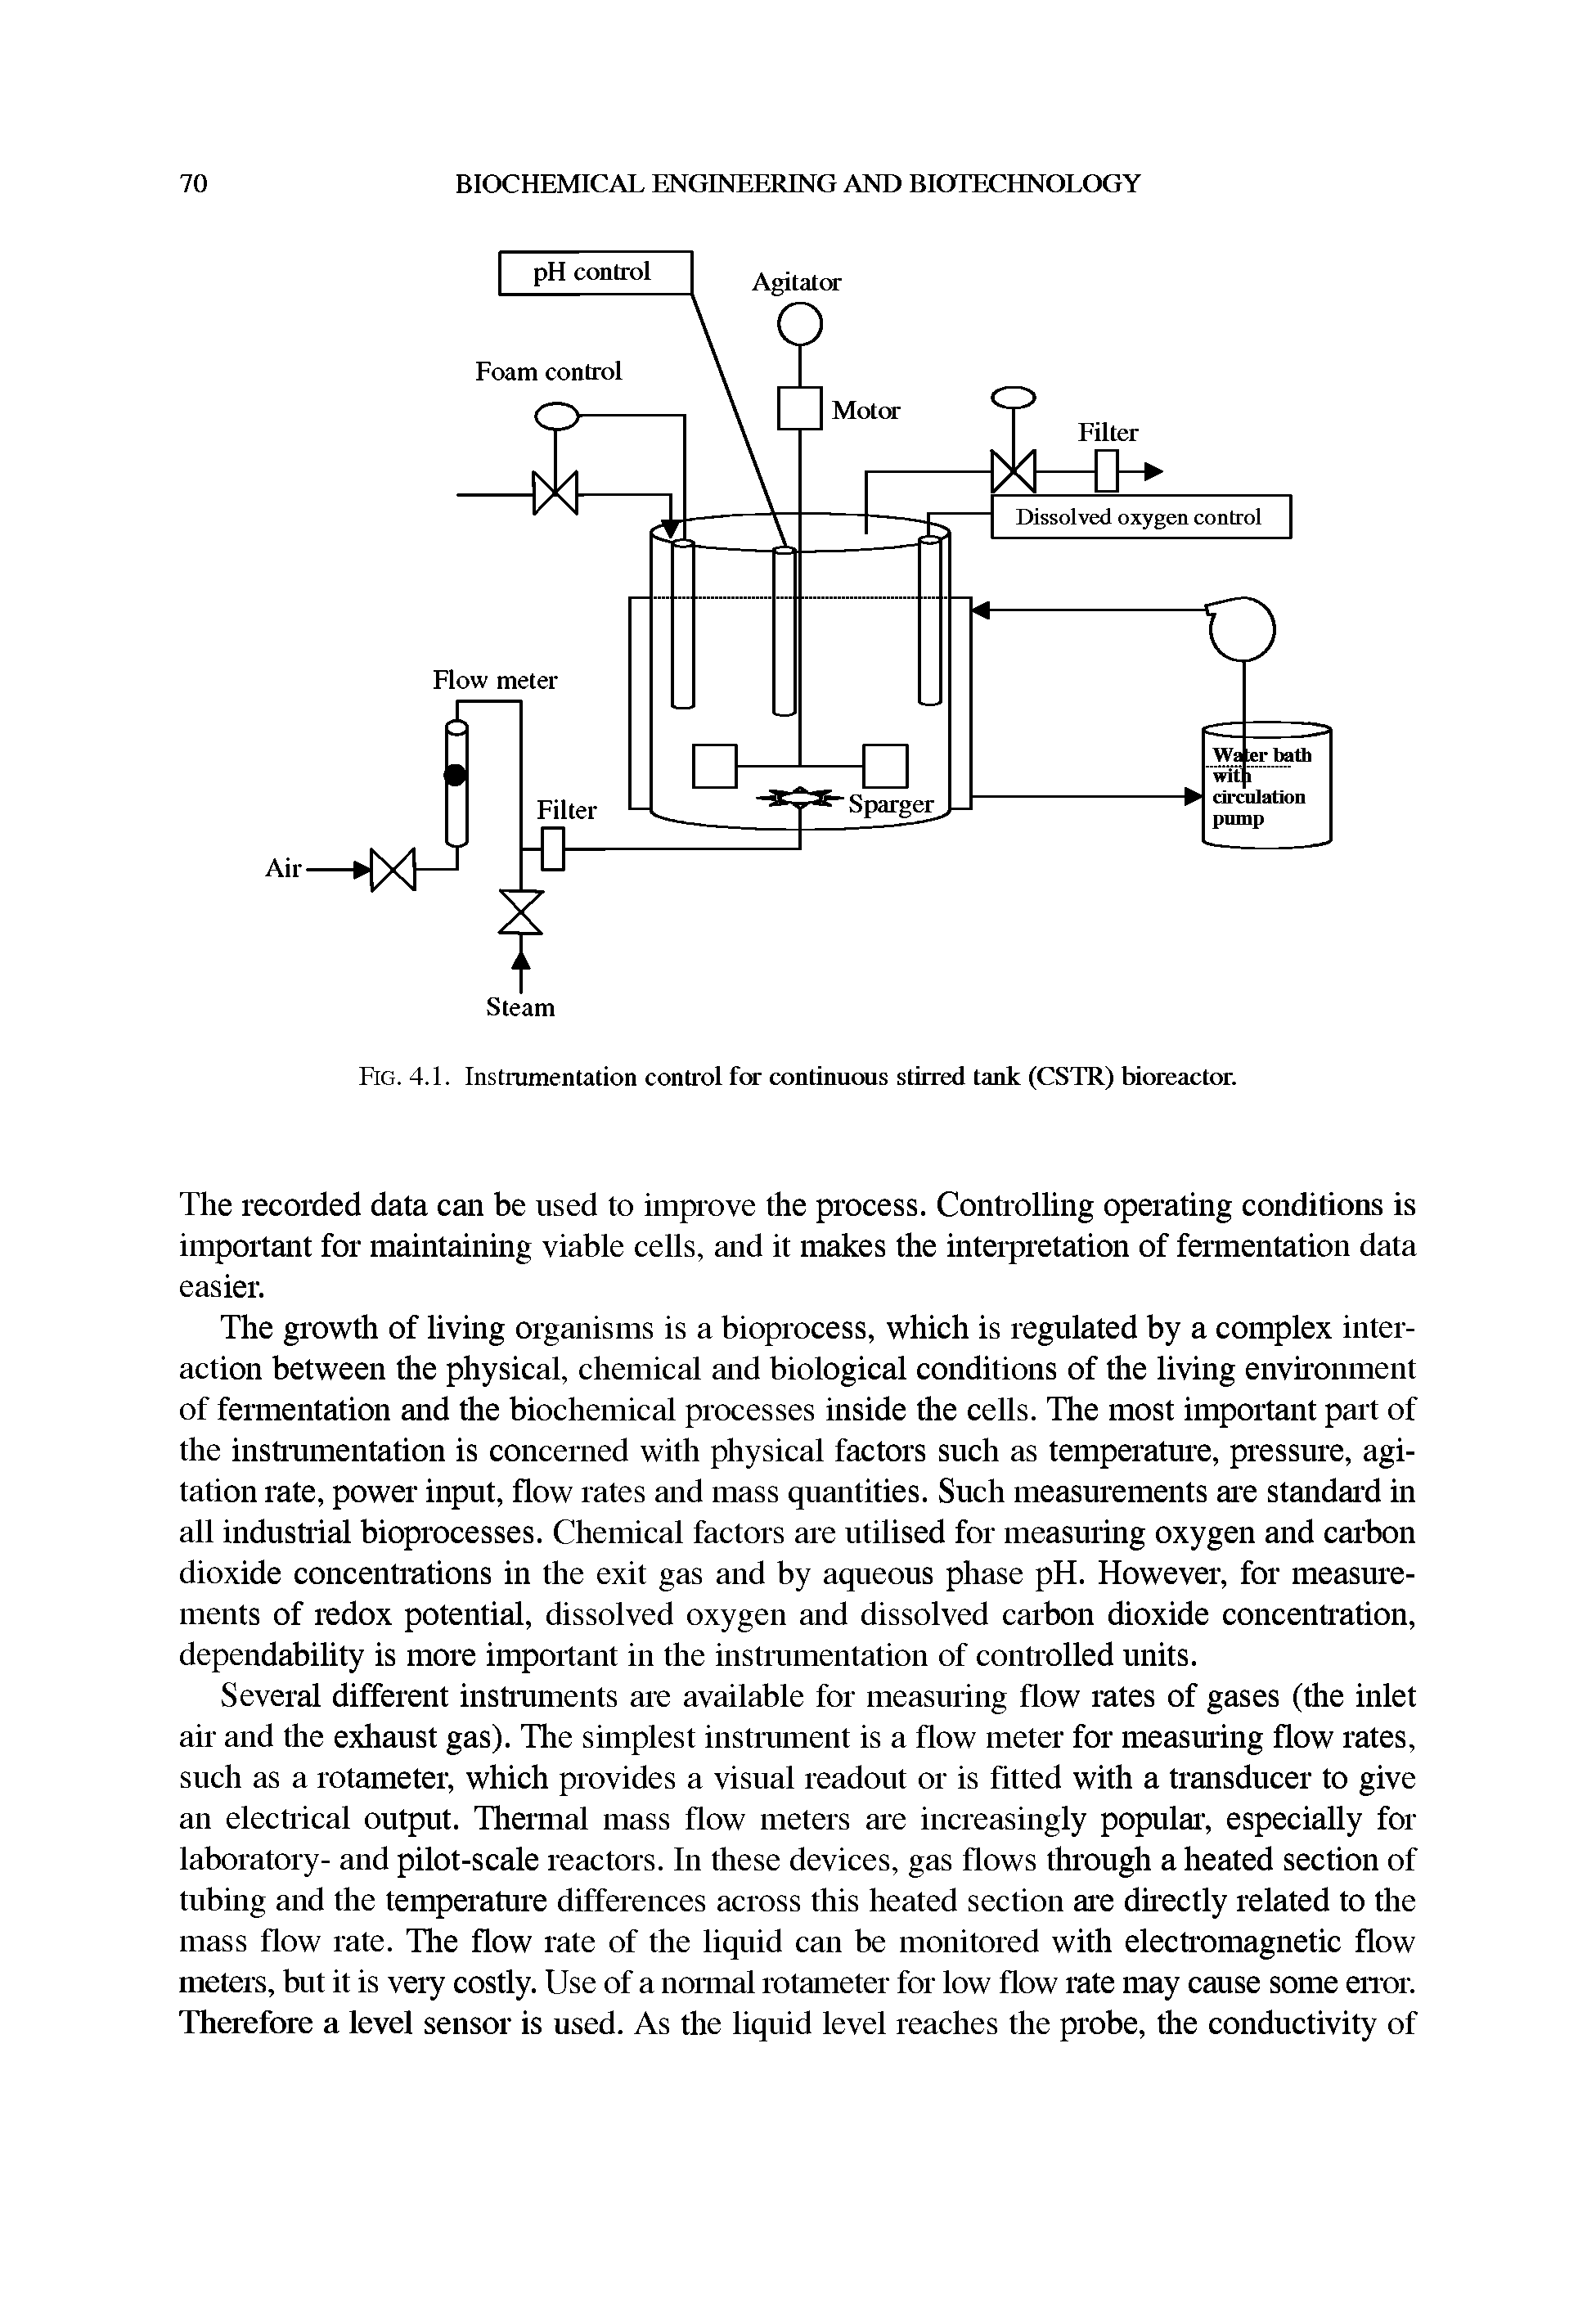 Fig. 4.1. Instrumentation control for continuous stirred tank (CSTR) bioreactor.